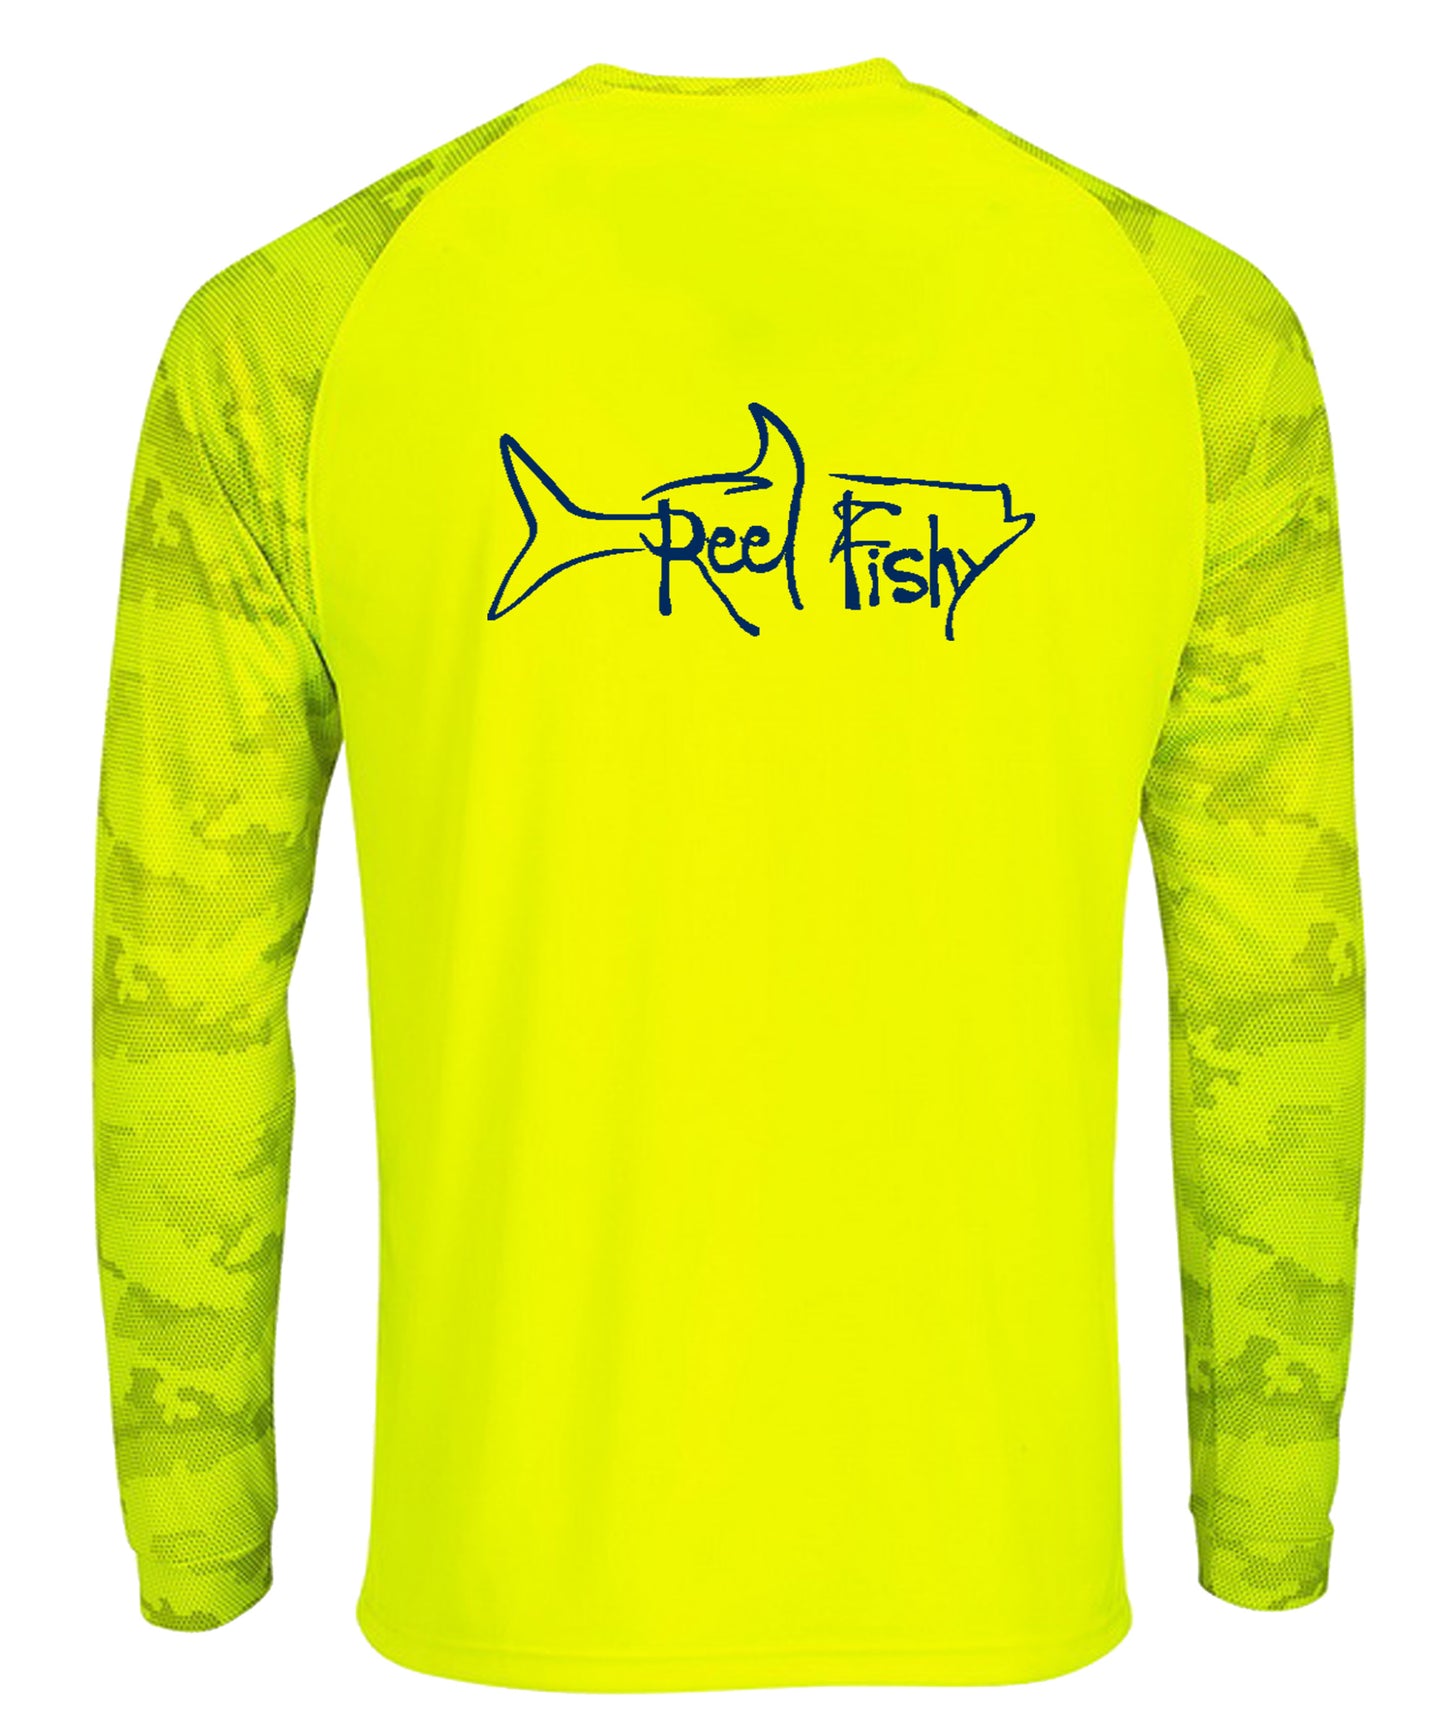 Tarpon Digital Camo Performance Dry-Fit Fishing Long Sleeve Shirts with 50+ UPF Sun Protection - Neon Green